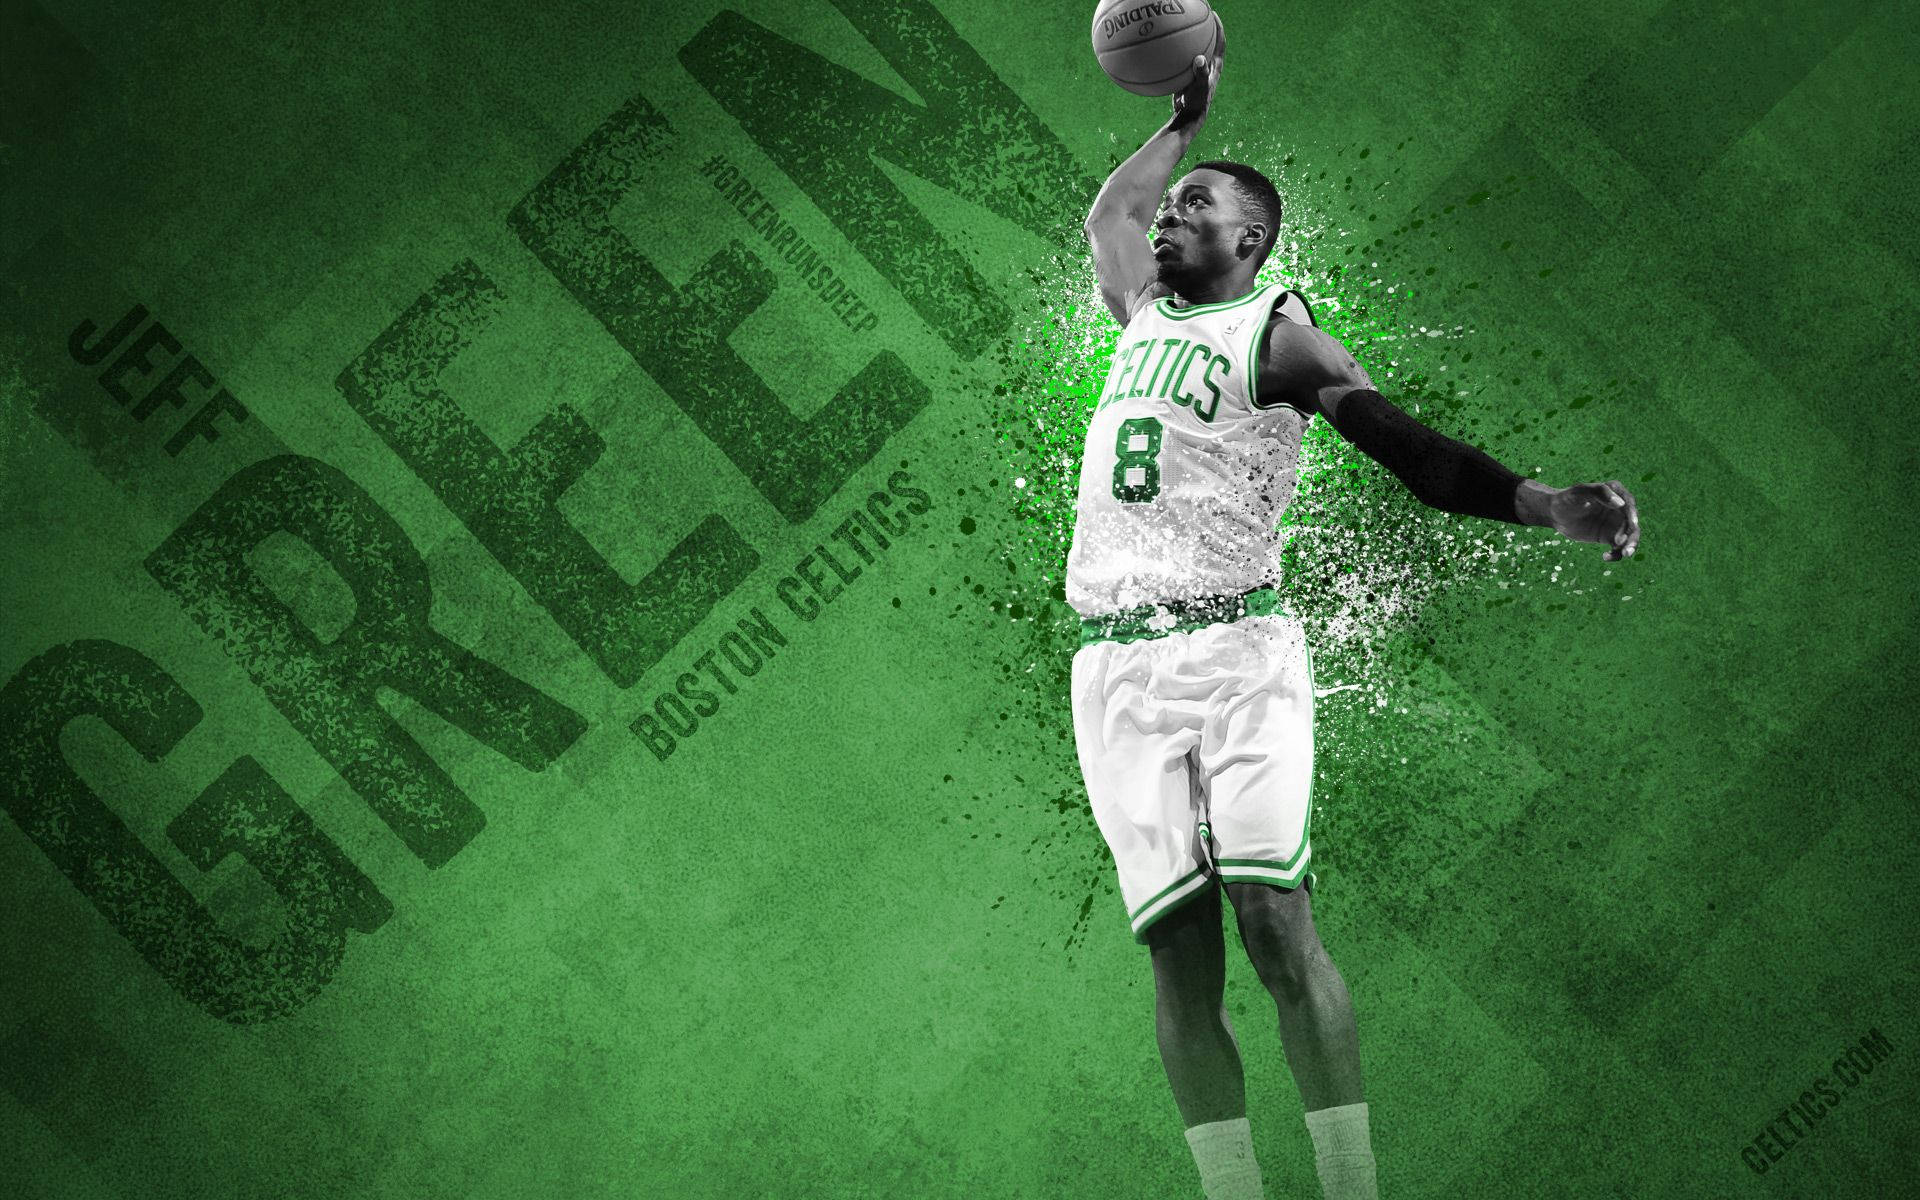 Celebrating Victory - The Boston Celtics